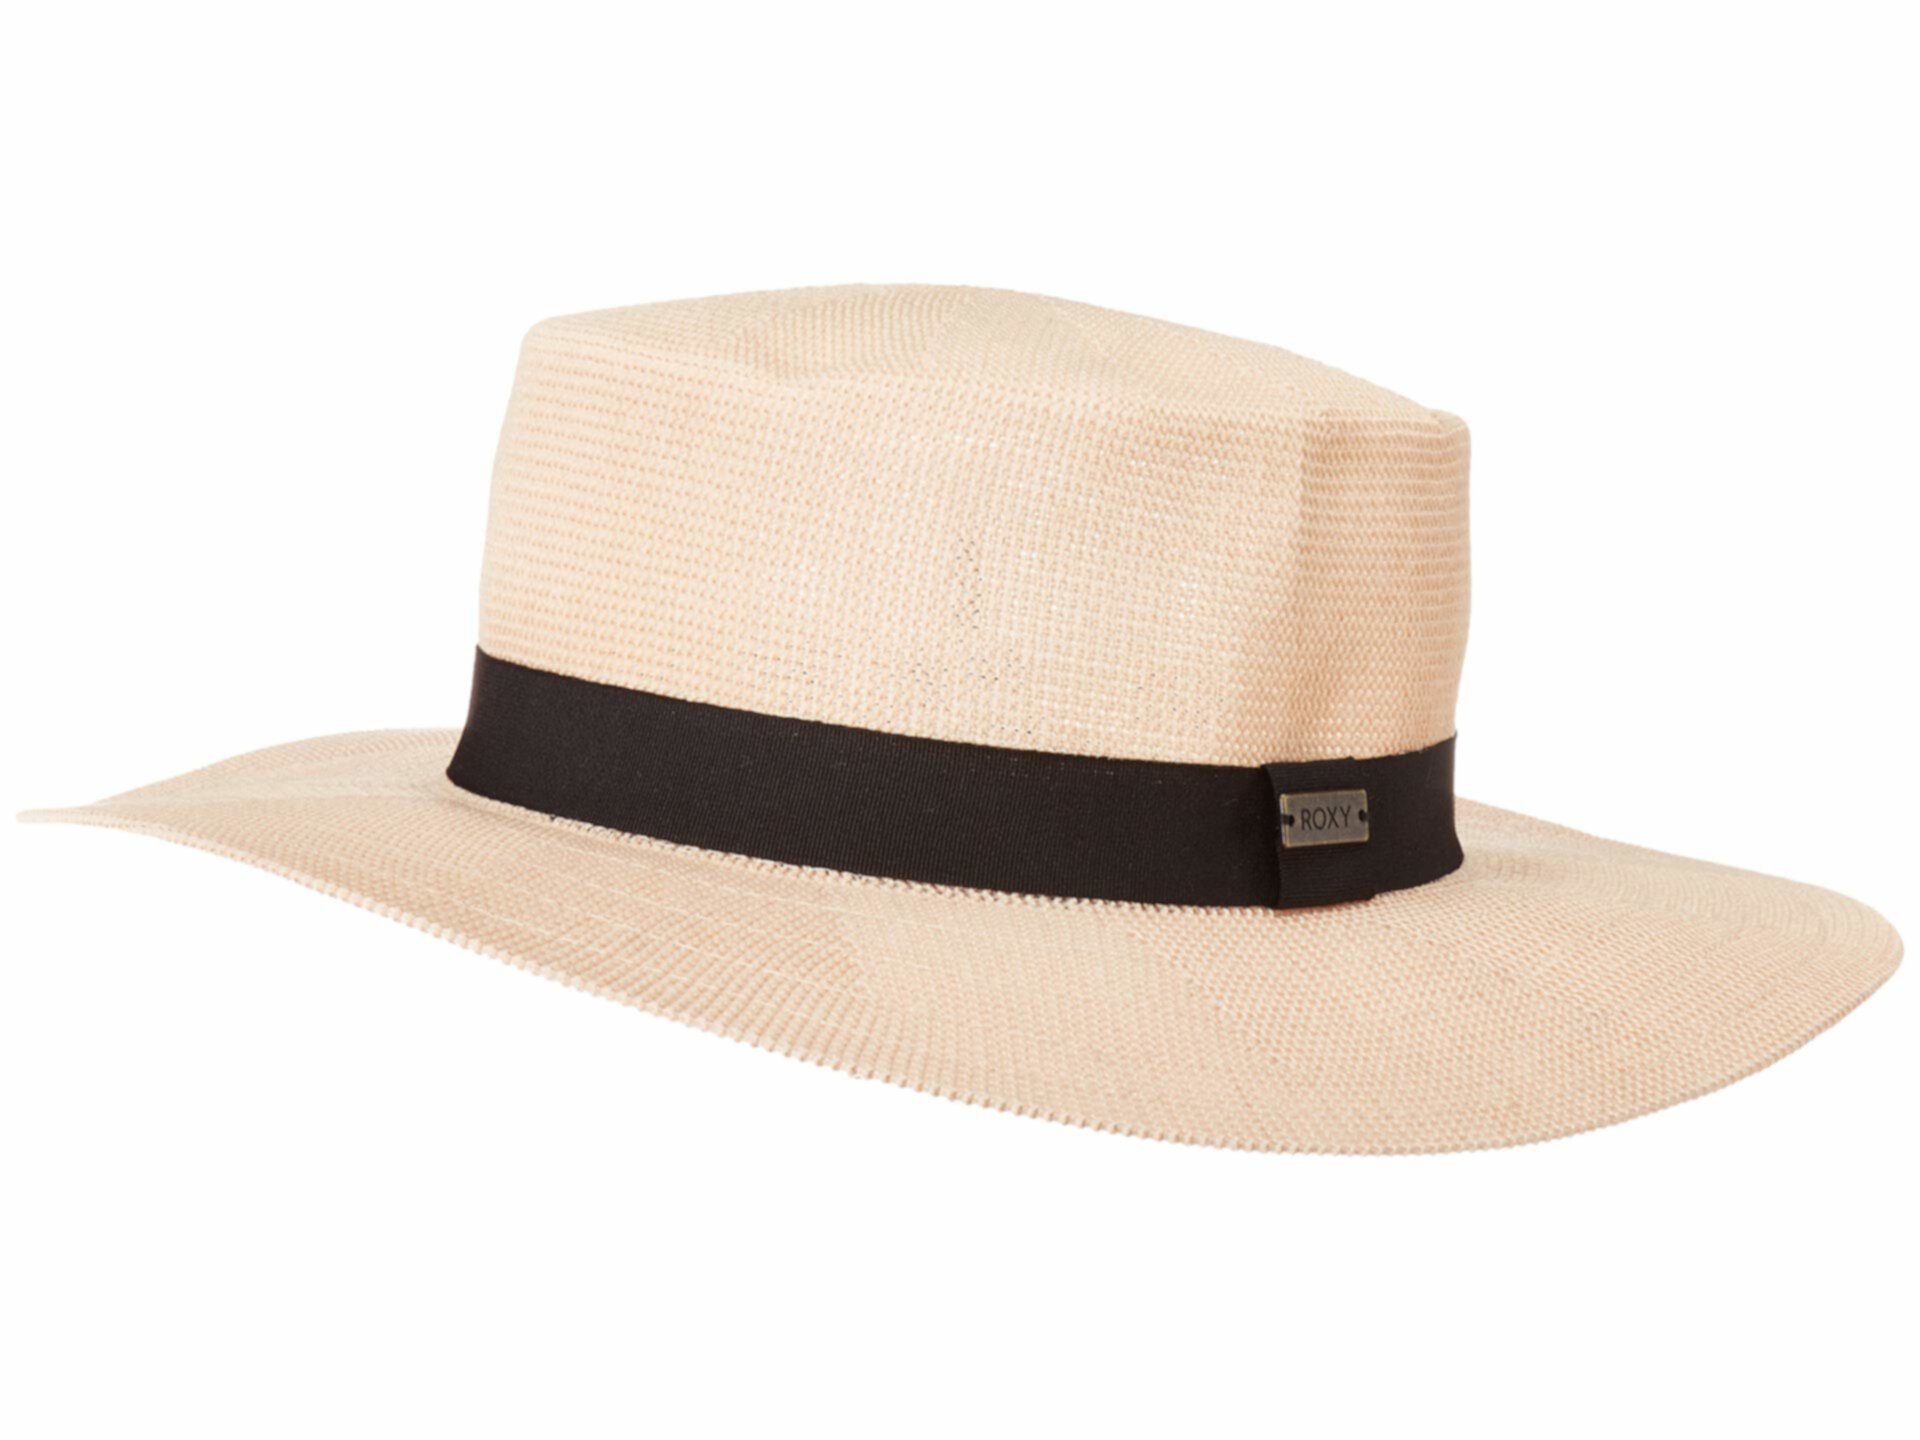 Получите Солнечную Панамскую Шляпу Roxy